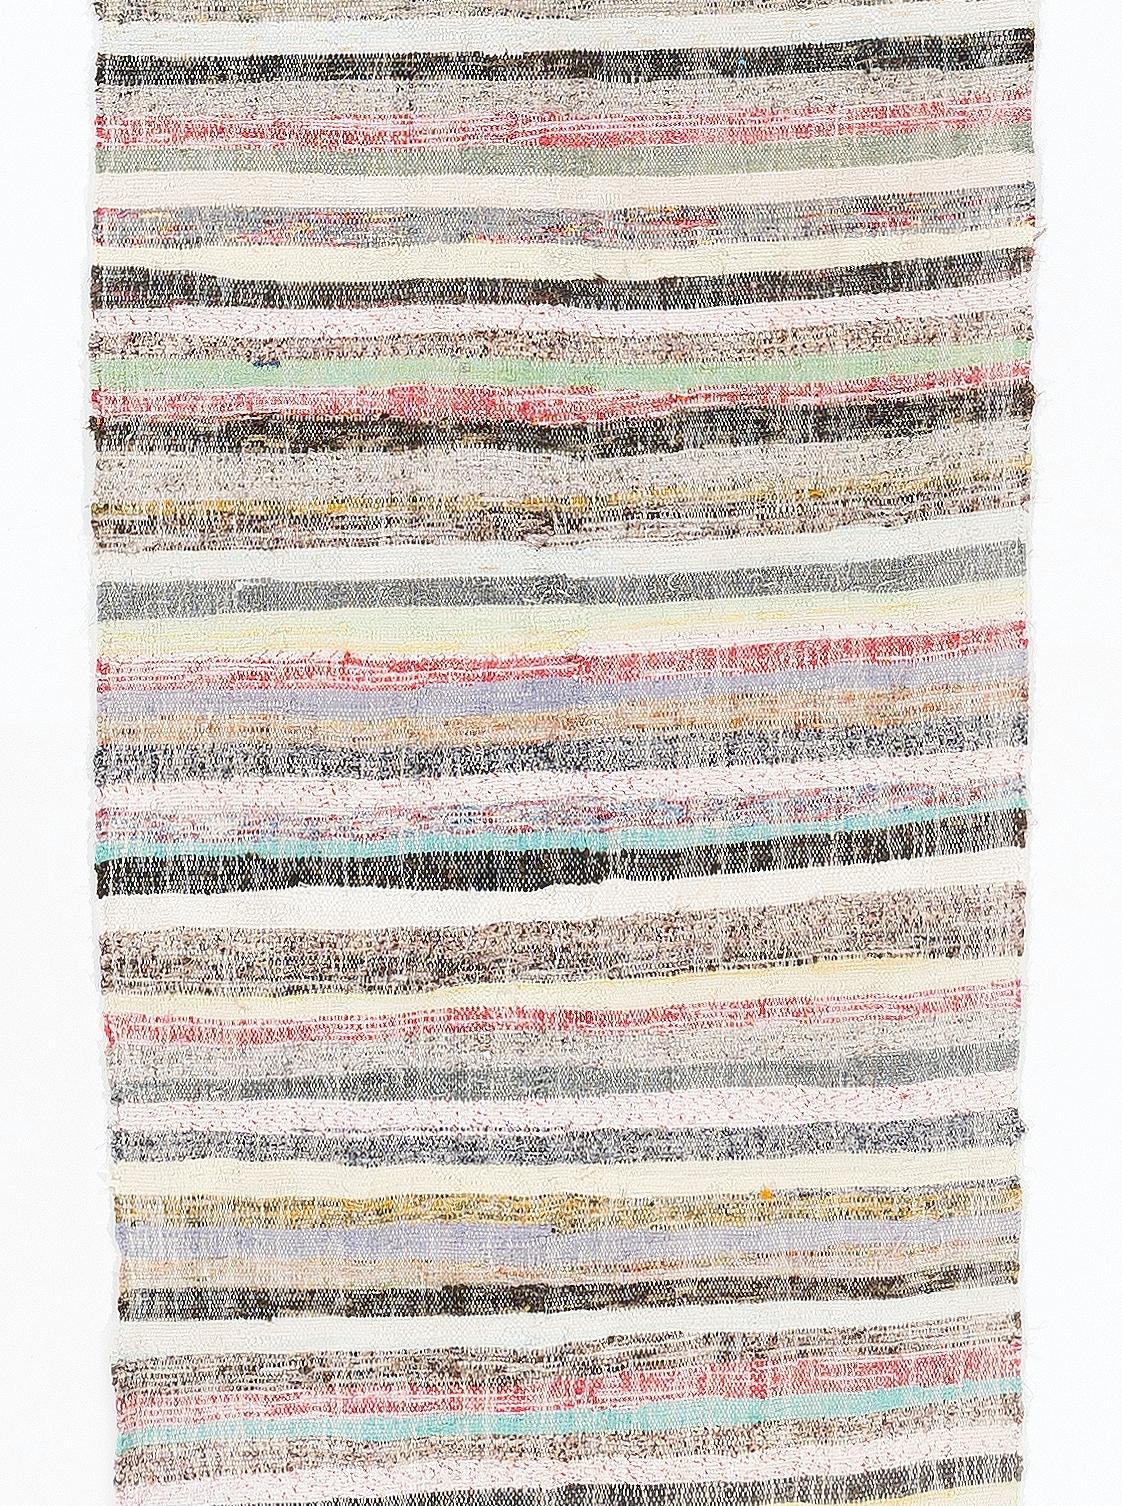 Hand-Woven 3.2x19 Ft Long Striped Kilim Runner 'Flat Weave', Adjustable Cotton Rag Rug For Sale